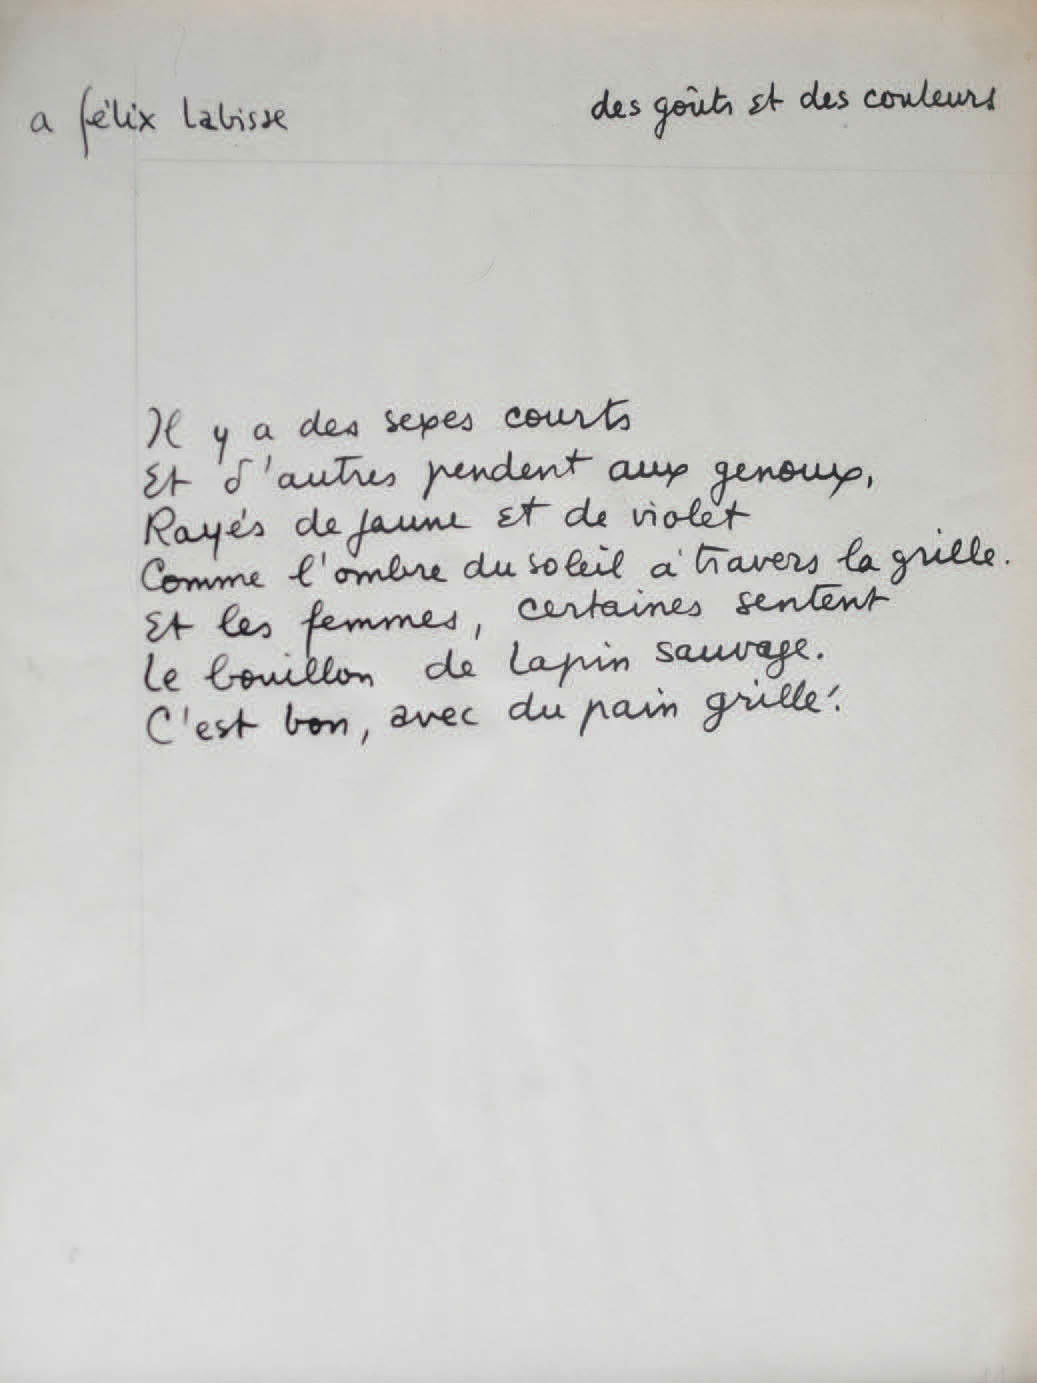 Artwork by Boris Vian, Poème autographe, Des goûts et des couleurs, Made of calligraphy in black ink dedicated to the painter